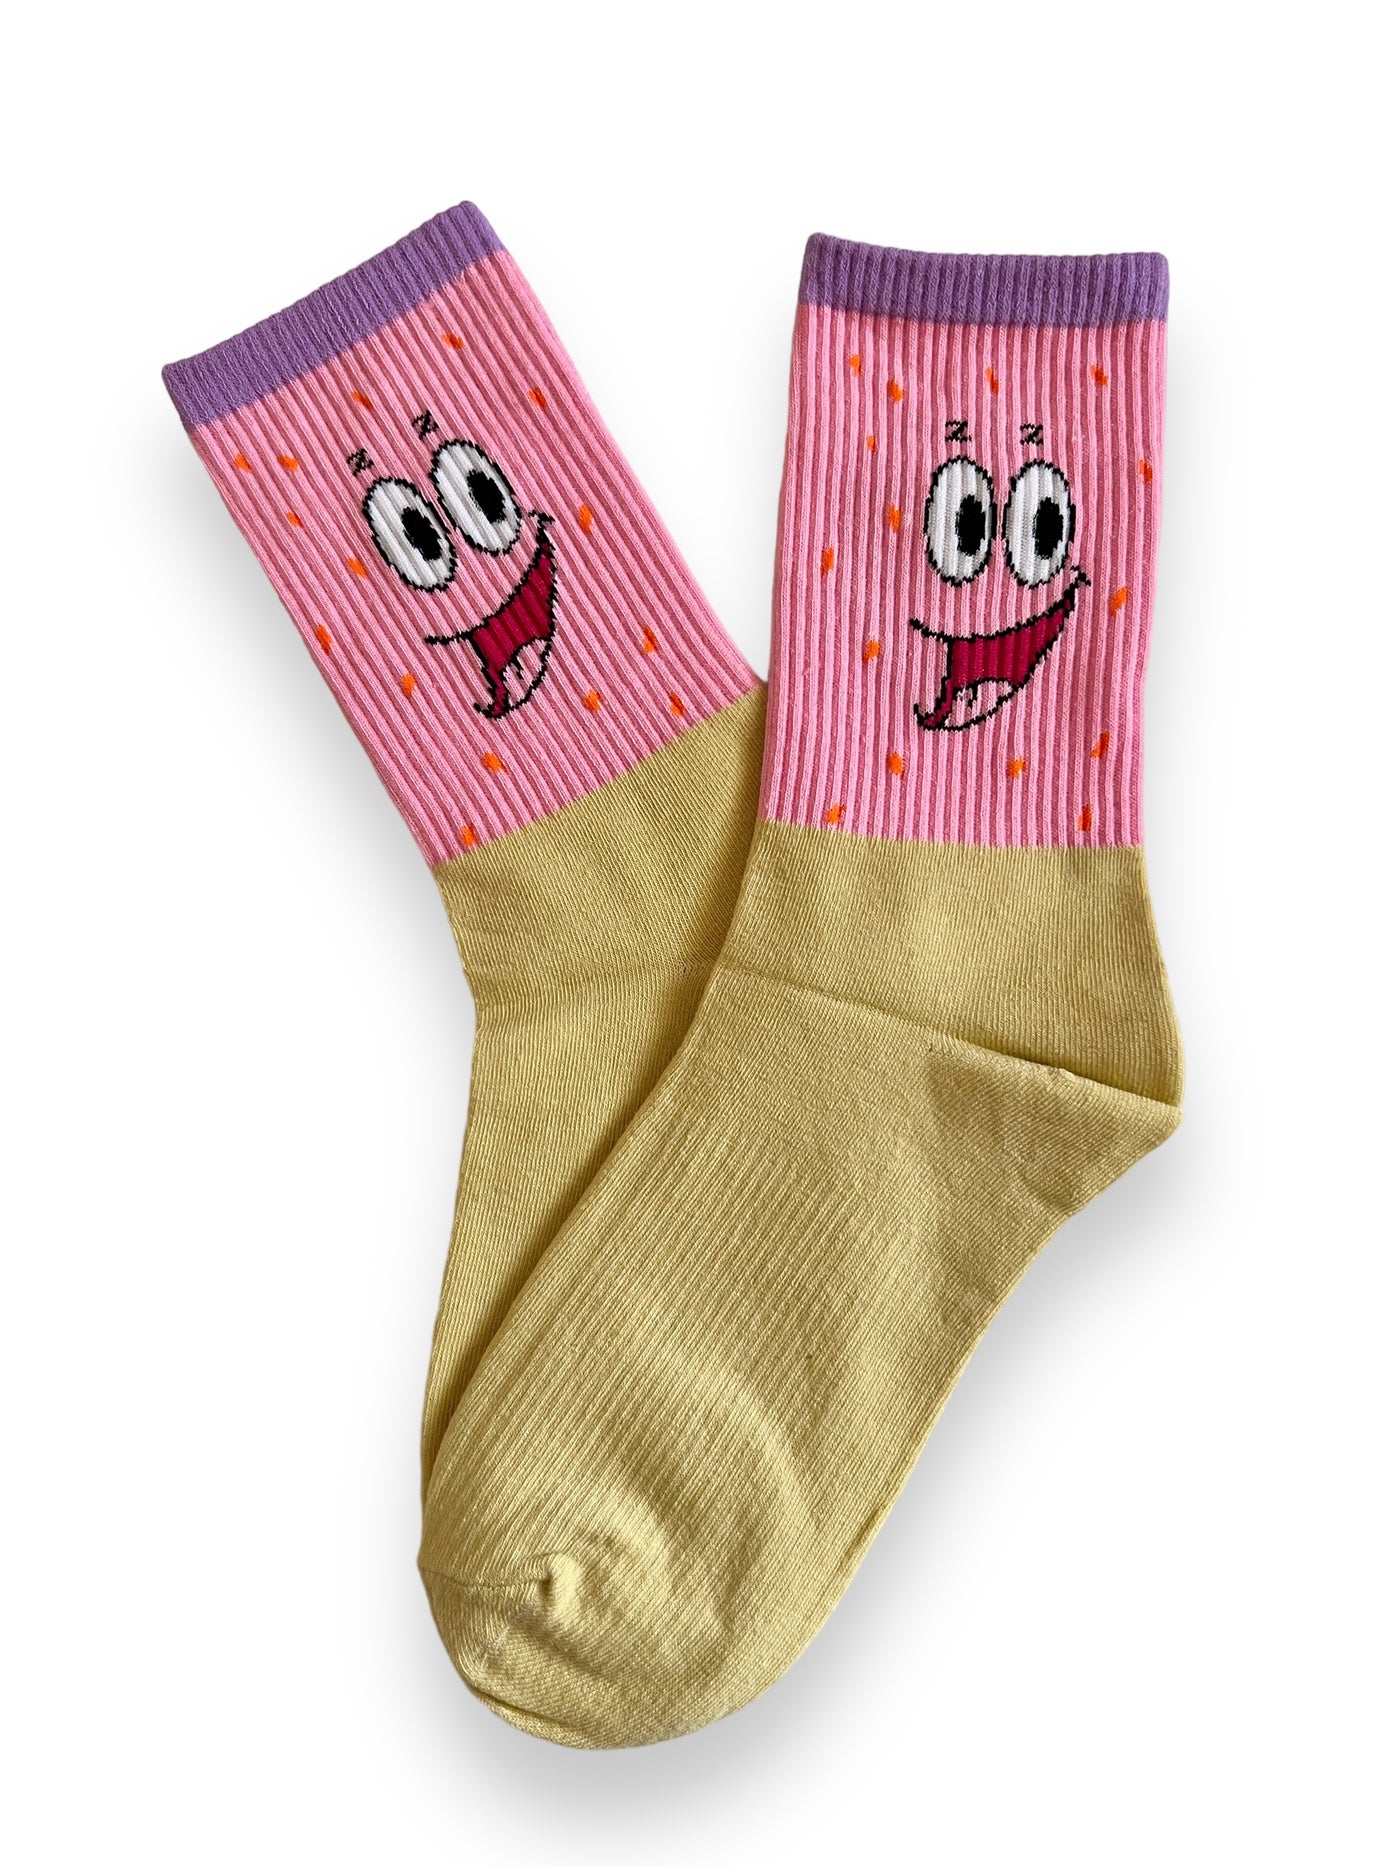 SpongeBob SquarePants socks - PROBOXS